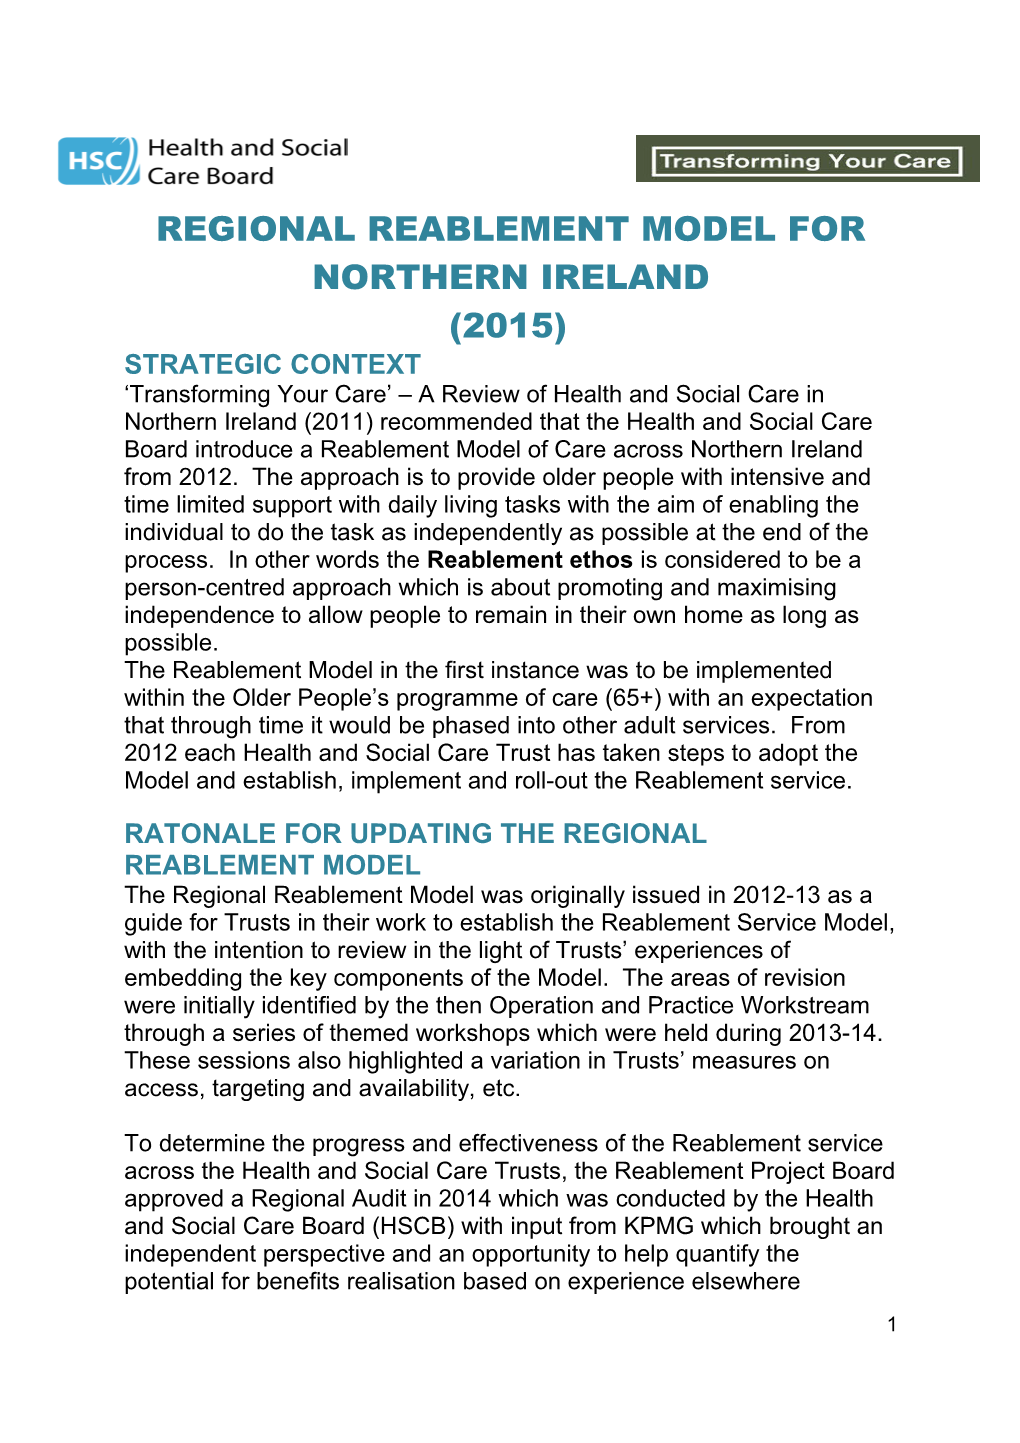 Reablement Revised Regional Model